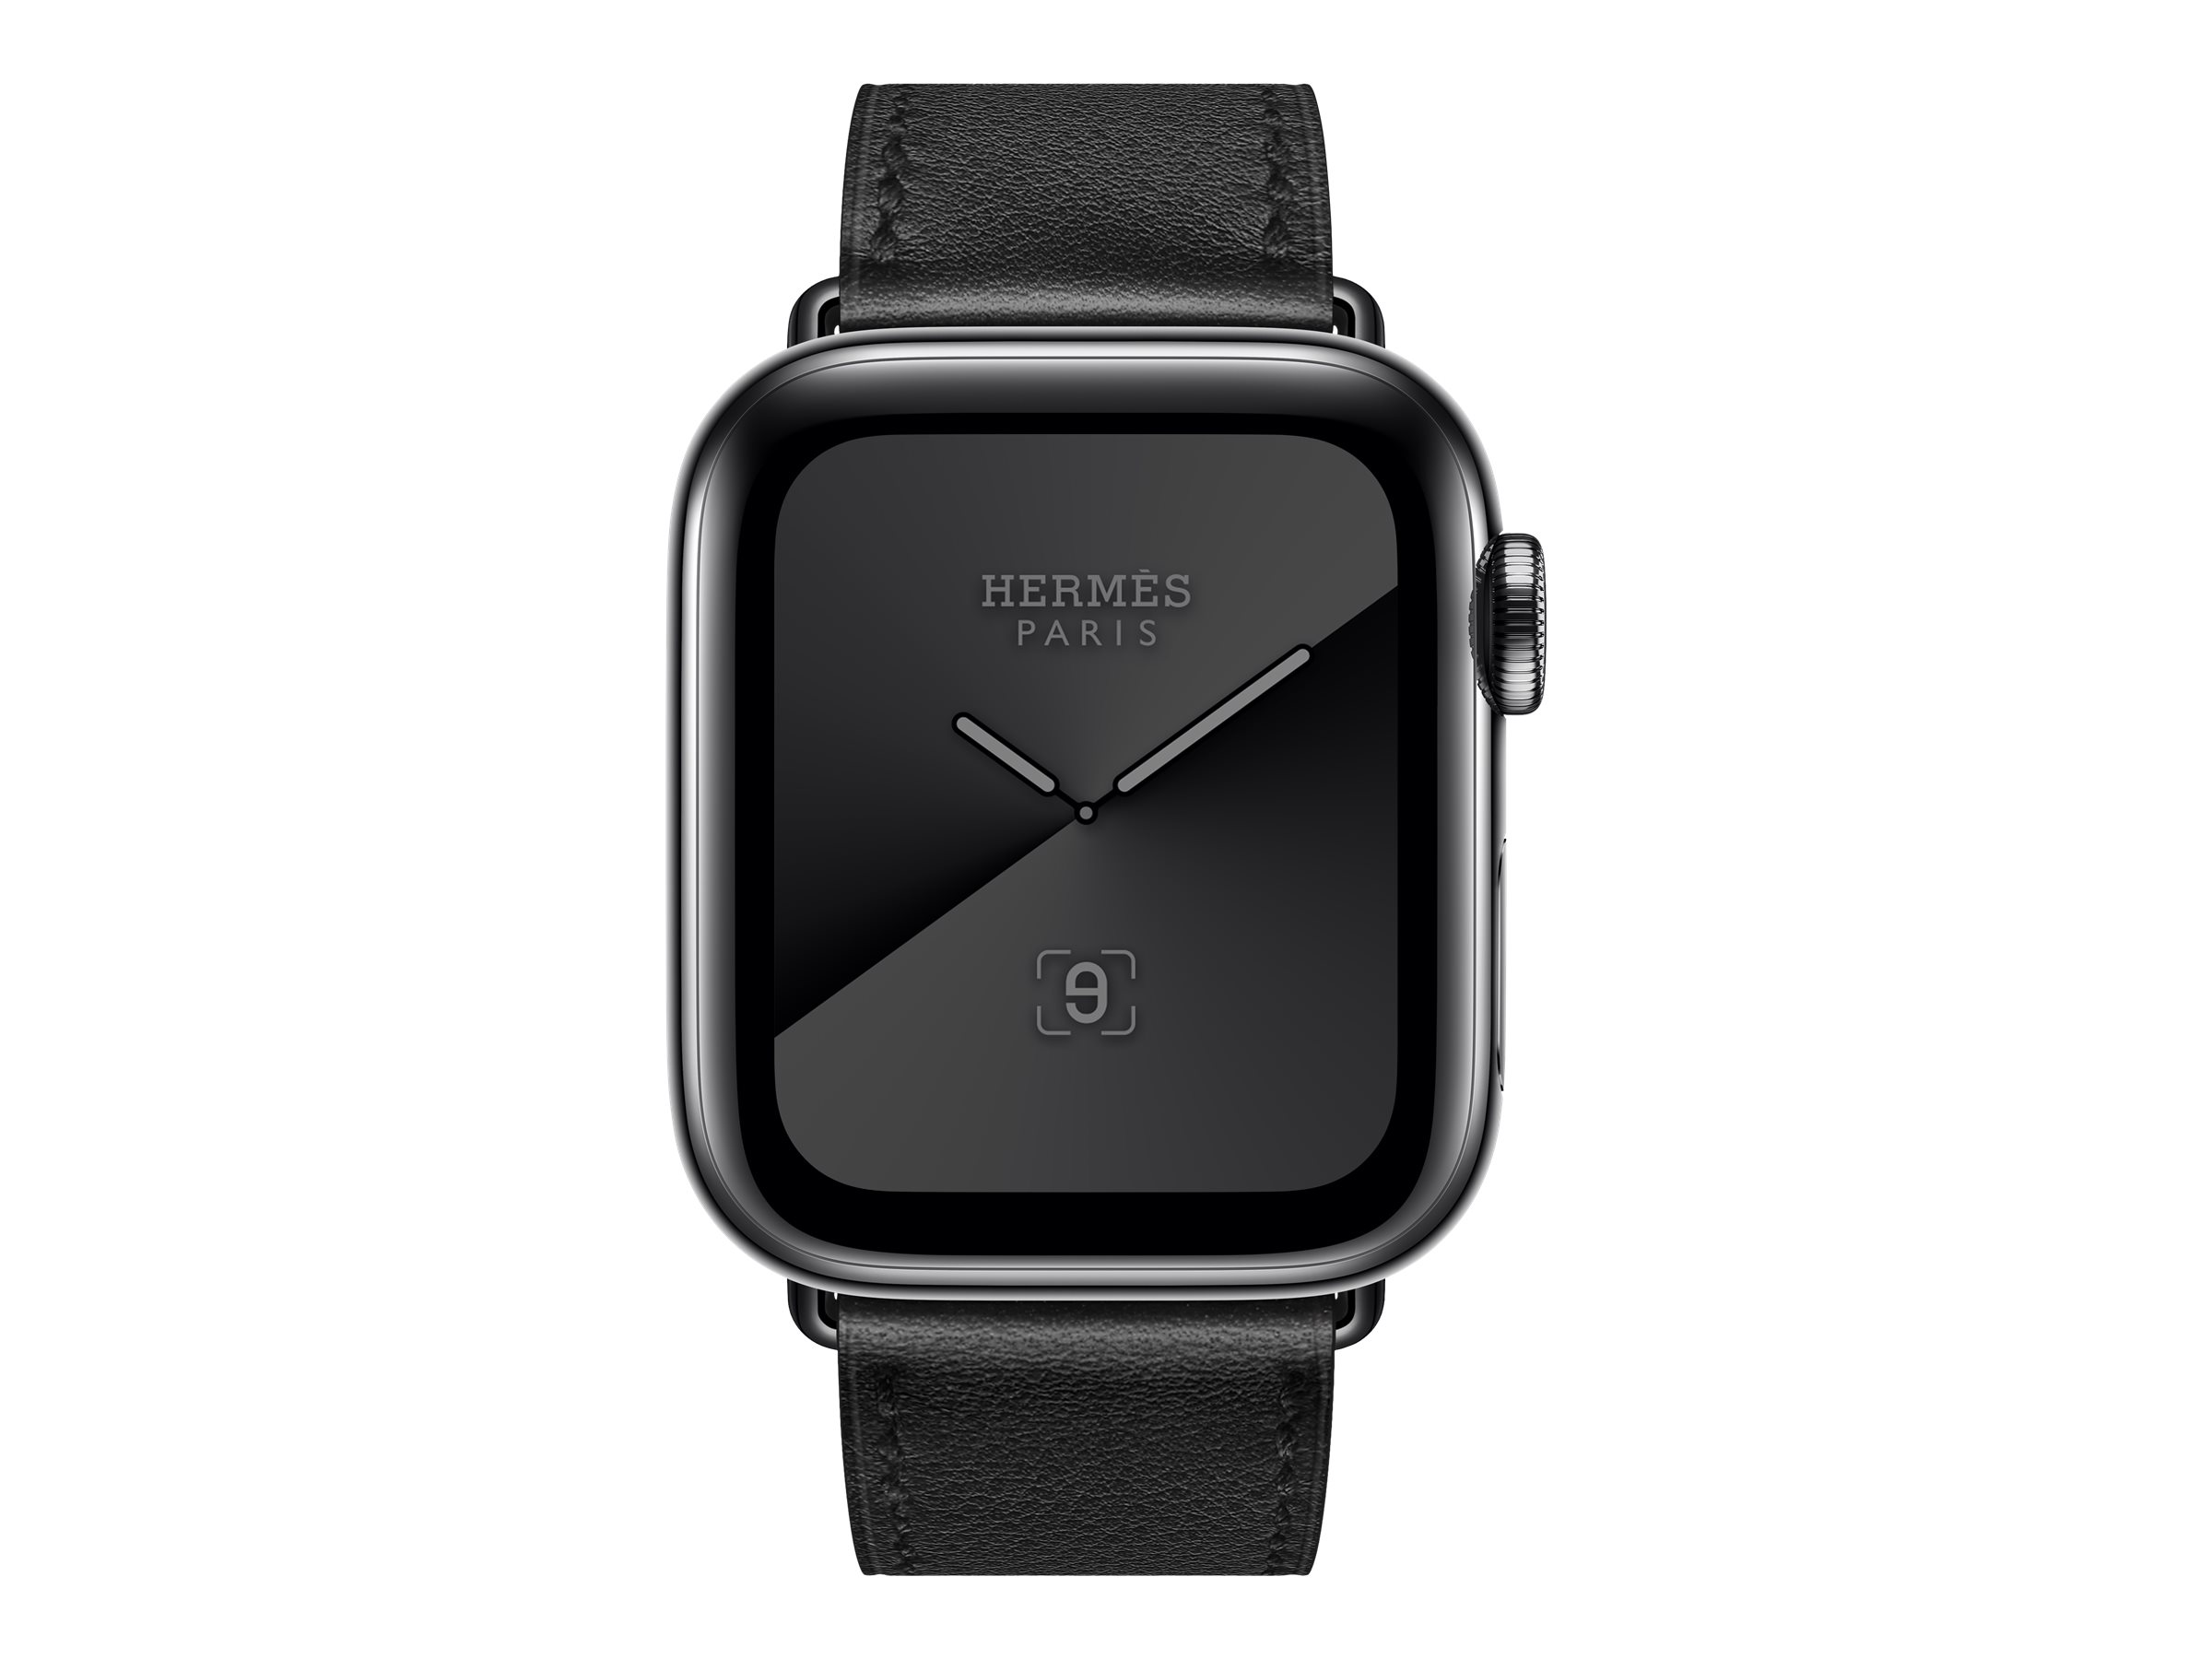 Apple Watch Hermès Series 5 (GPS + Cellular) - full specs, details